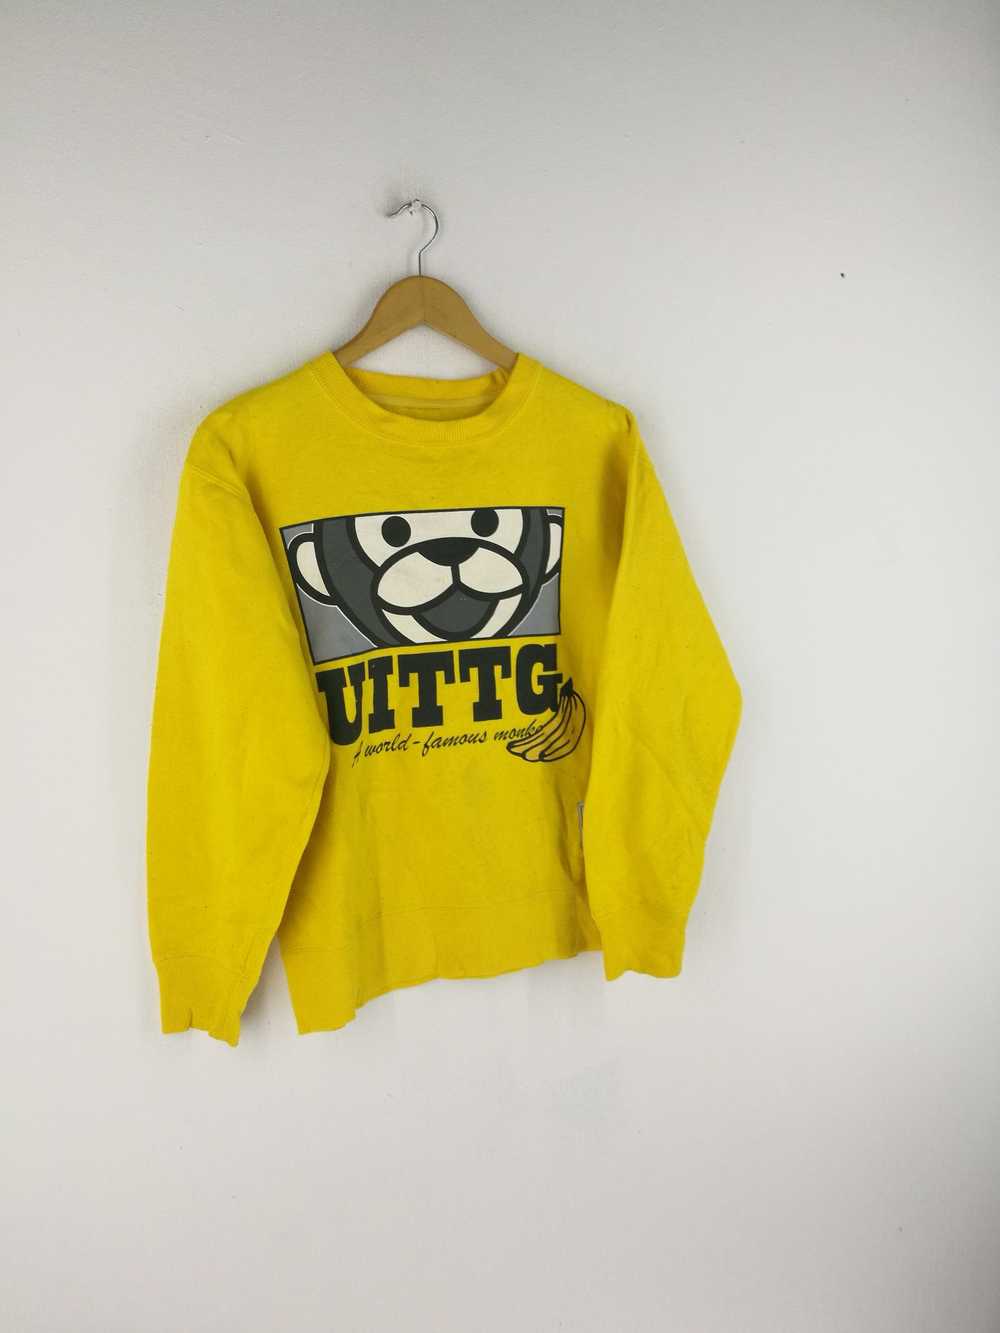 Japanese Brand Uttg baby Bape sweatshirt - image 3